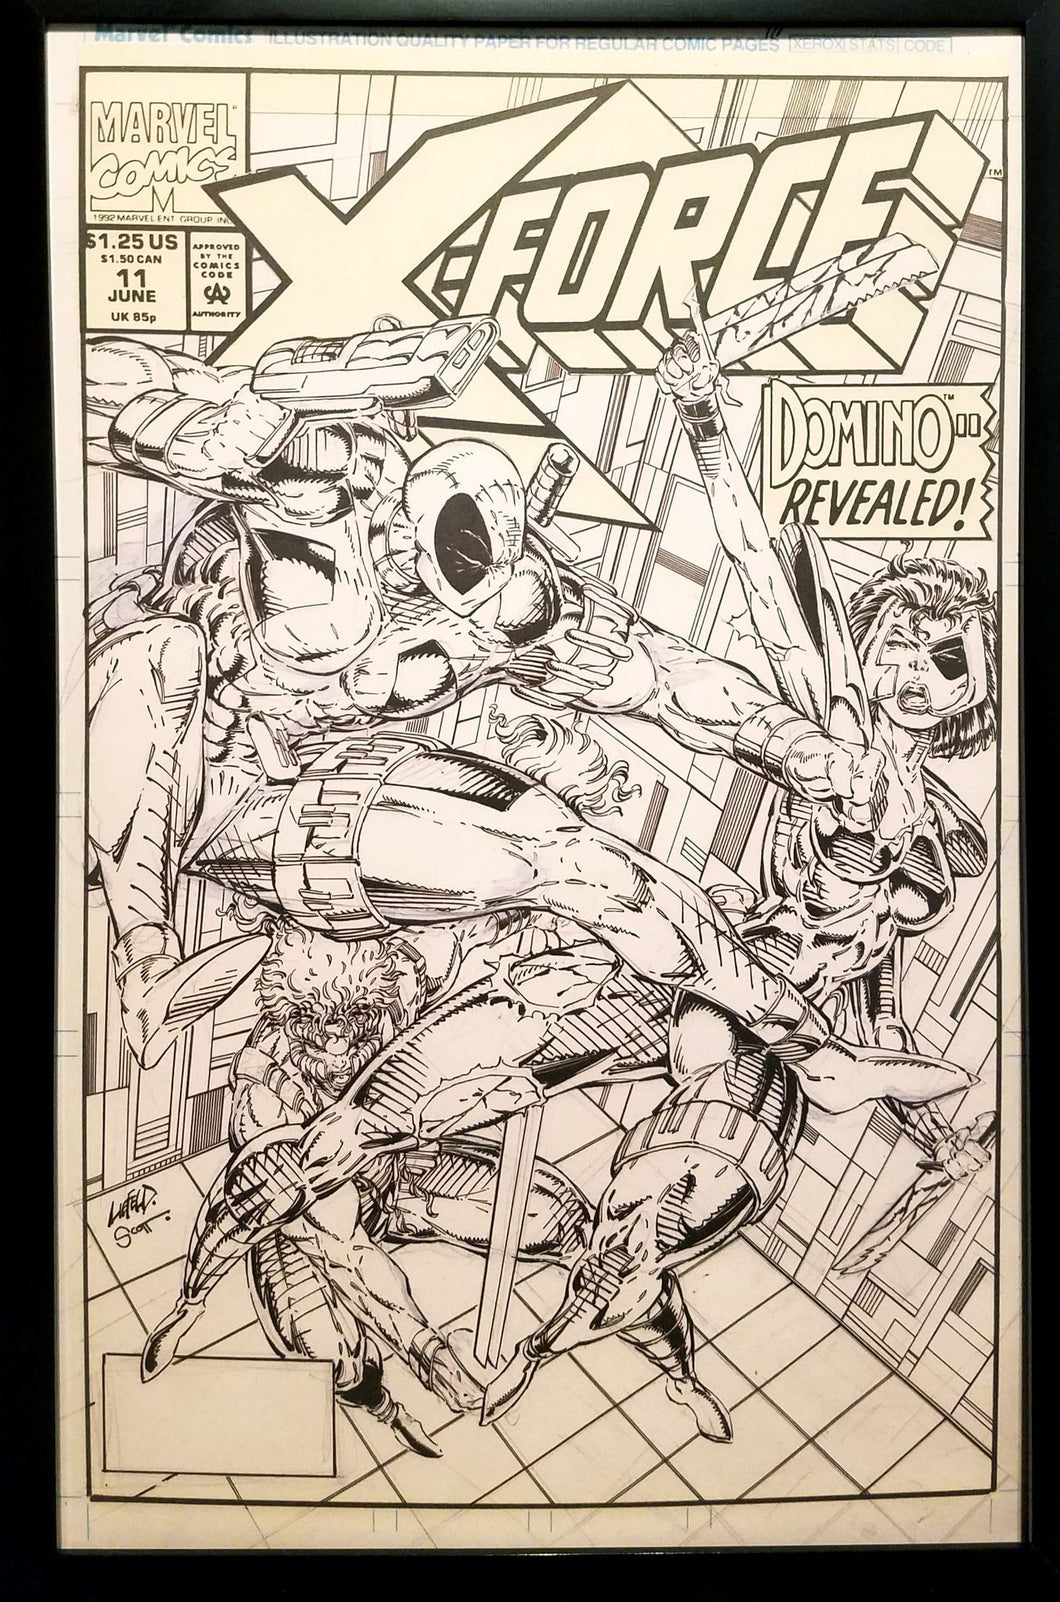 X-Force #11 Deadpool by Rob Liefeld 11x17 FRAMED Original Art Poster Marvel Comics